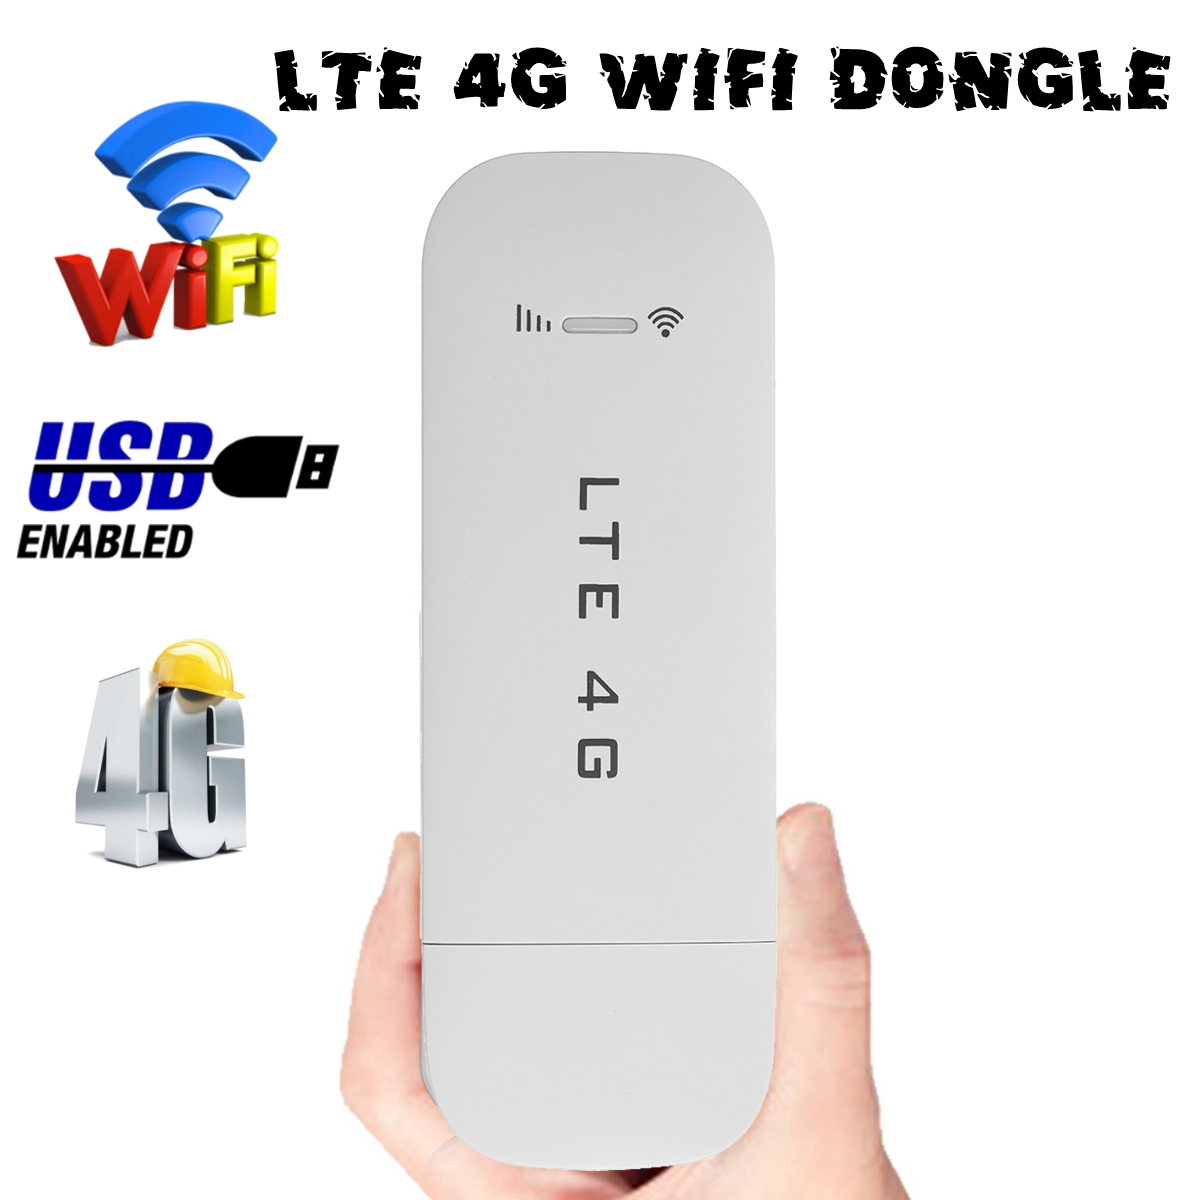 

Portable WIFI 4G Router Professional Hotspot WiFi Repeater Wireless Router MiFi Wireless Router Mobile Wi-Fi Hotspot